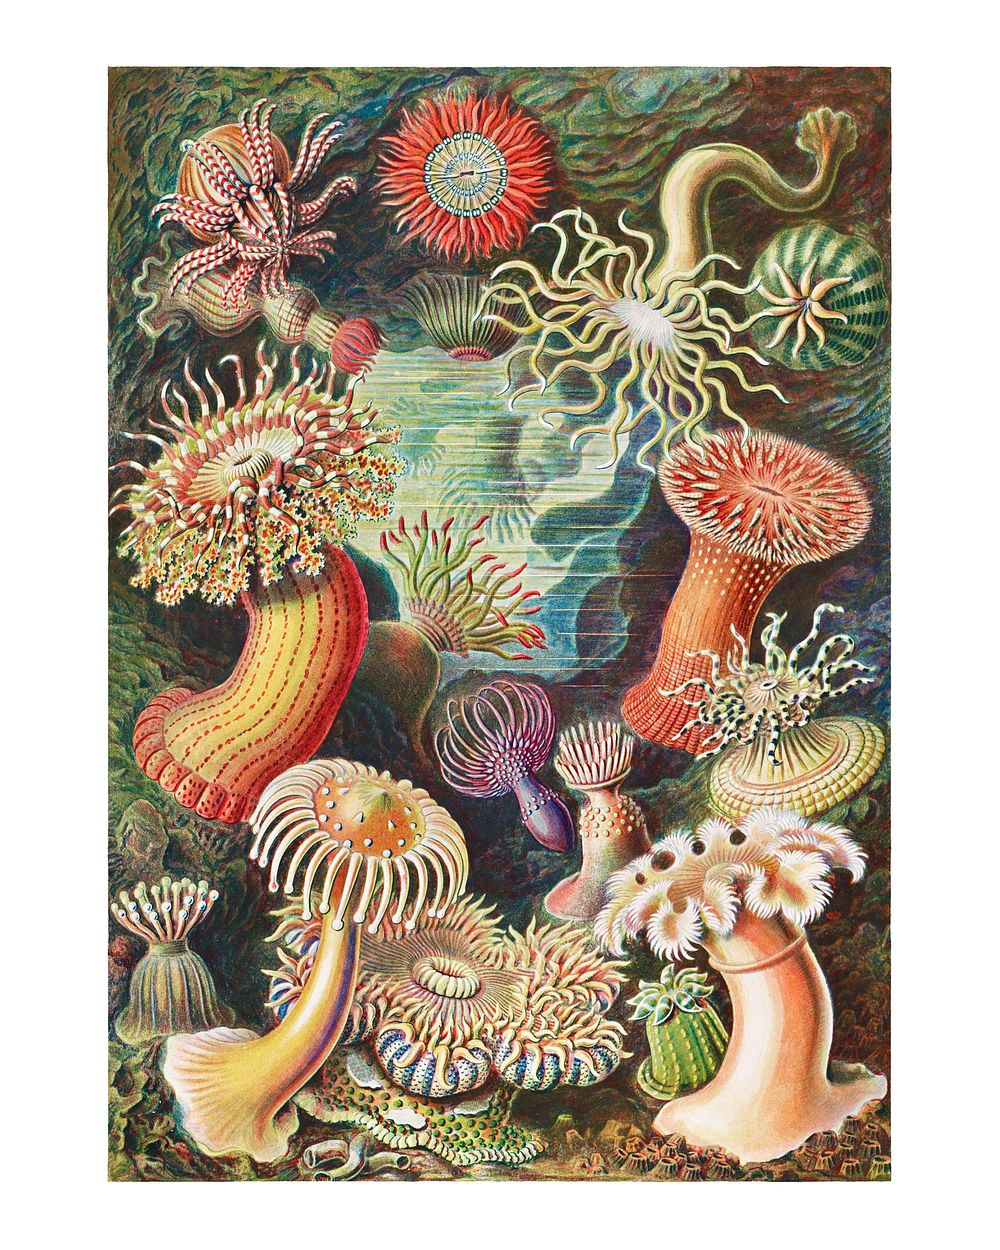 Mushroom vintage poster wall decor, from Kunstformen der Natur